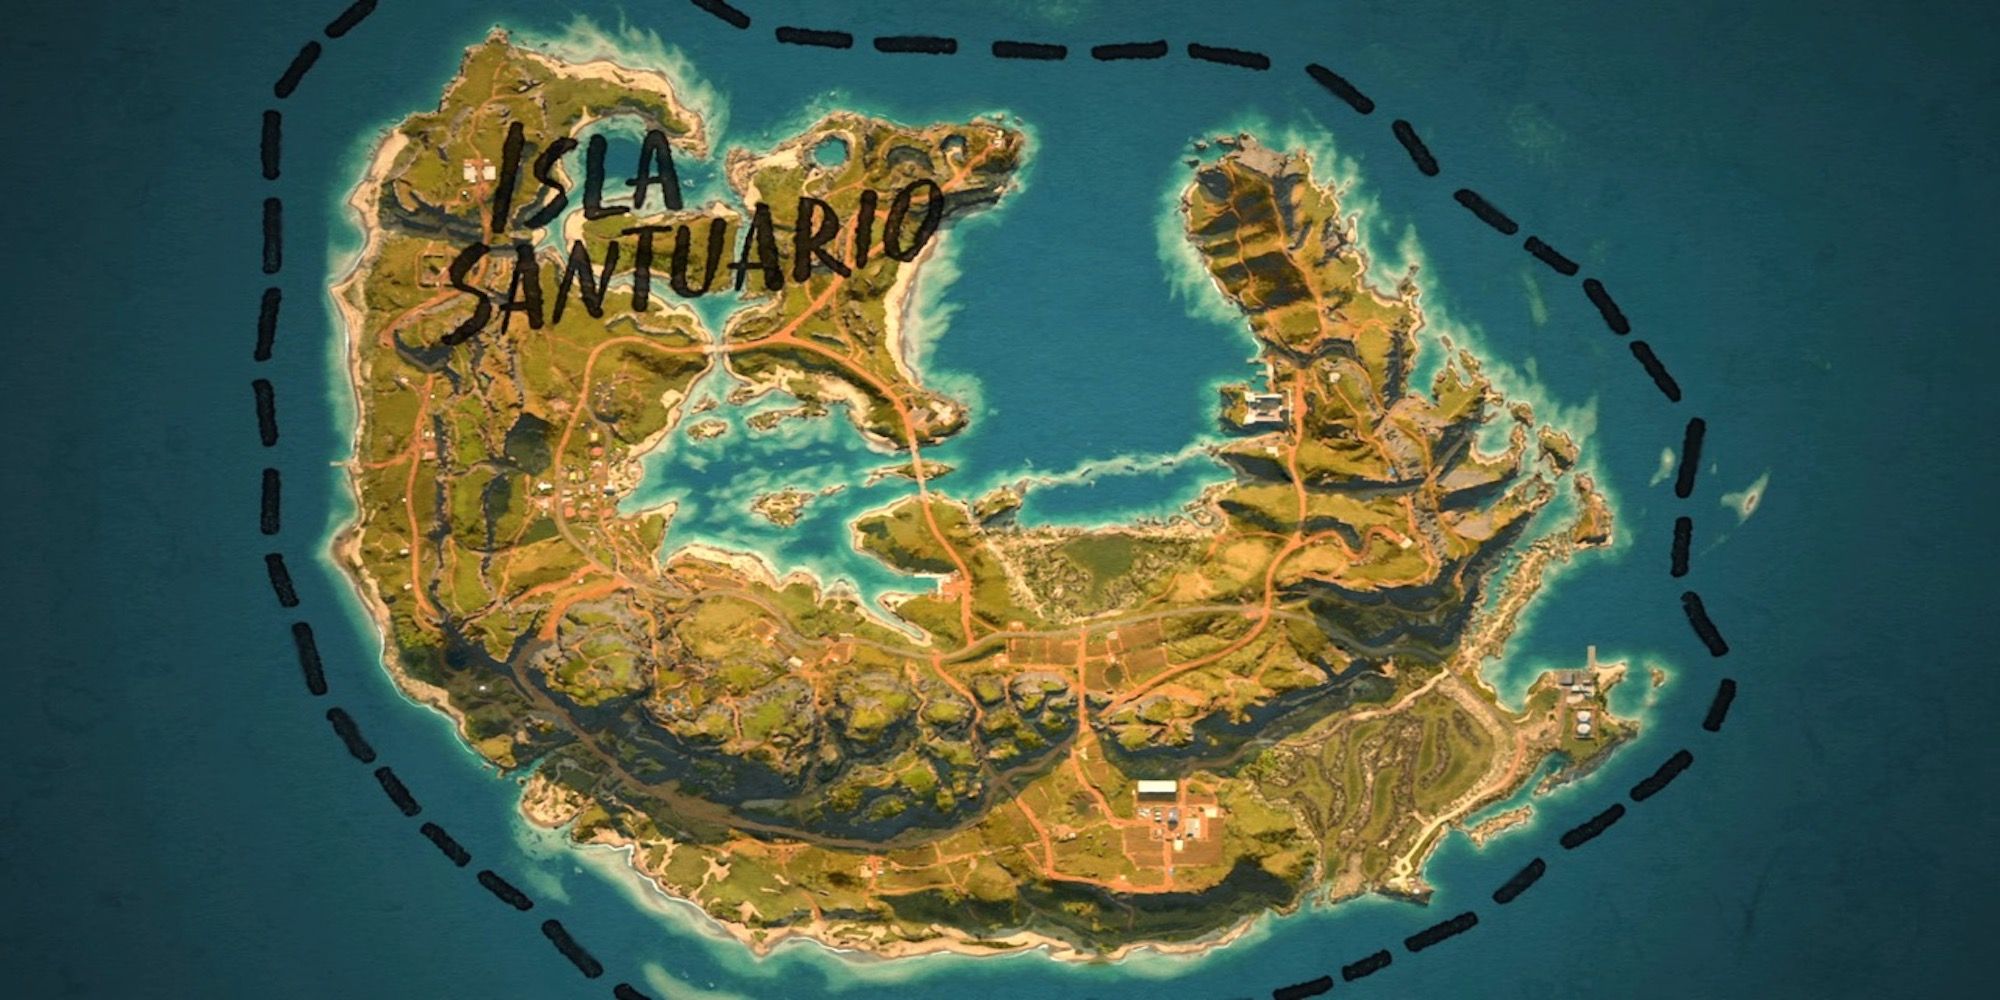 Isla Santuario map from Far Cry 6